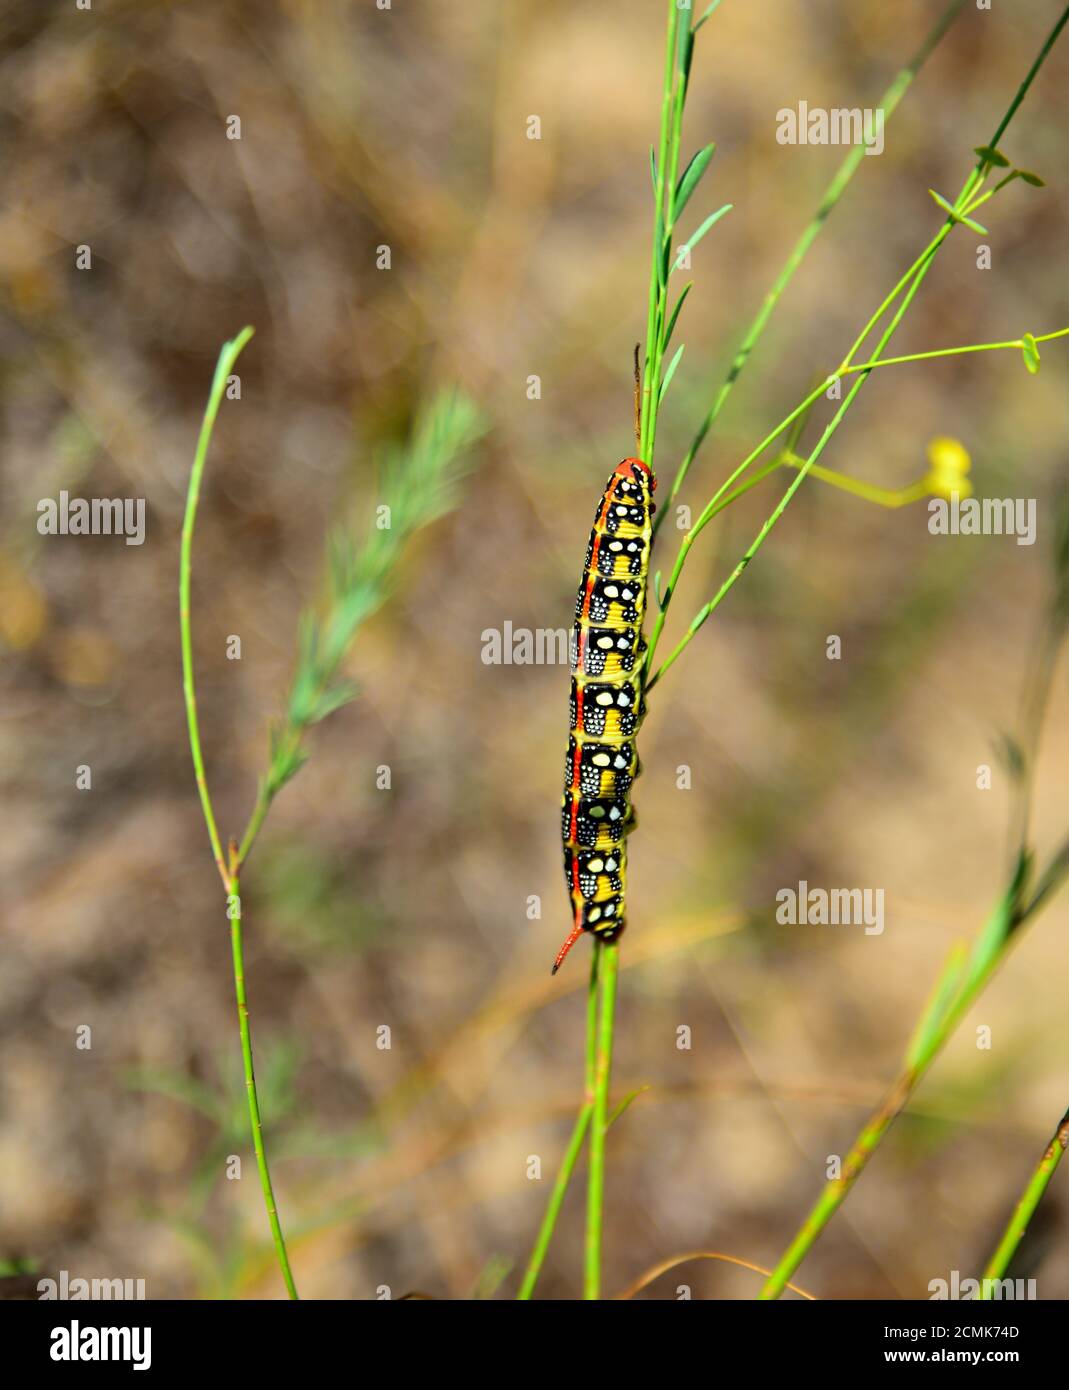 Hyles euphorbiae caterpillar on a stalk of grass Stock Photo